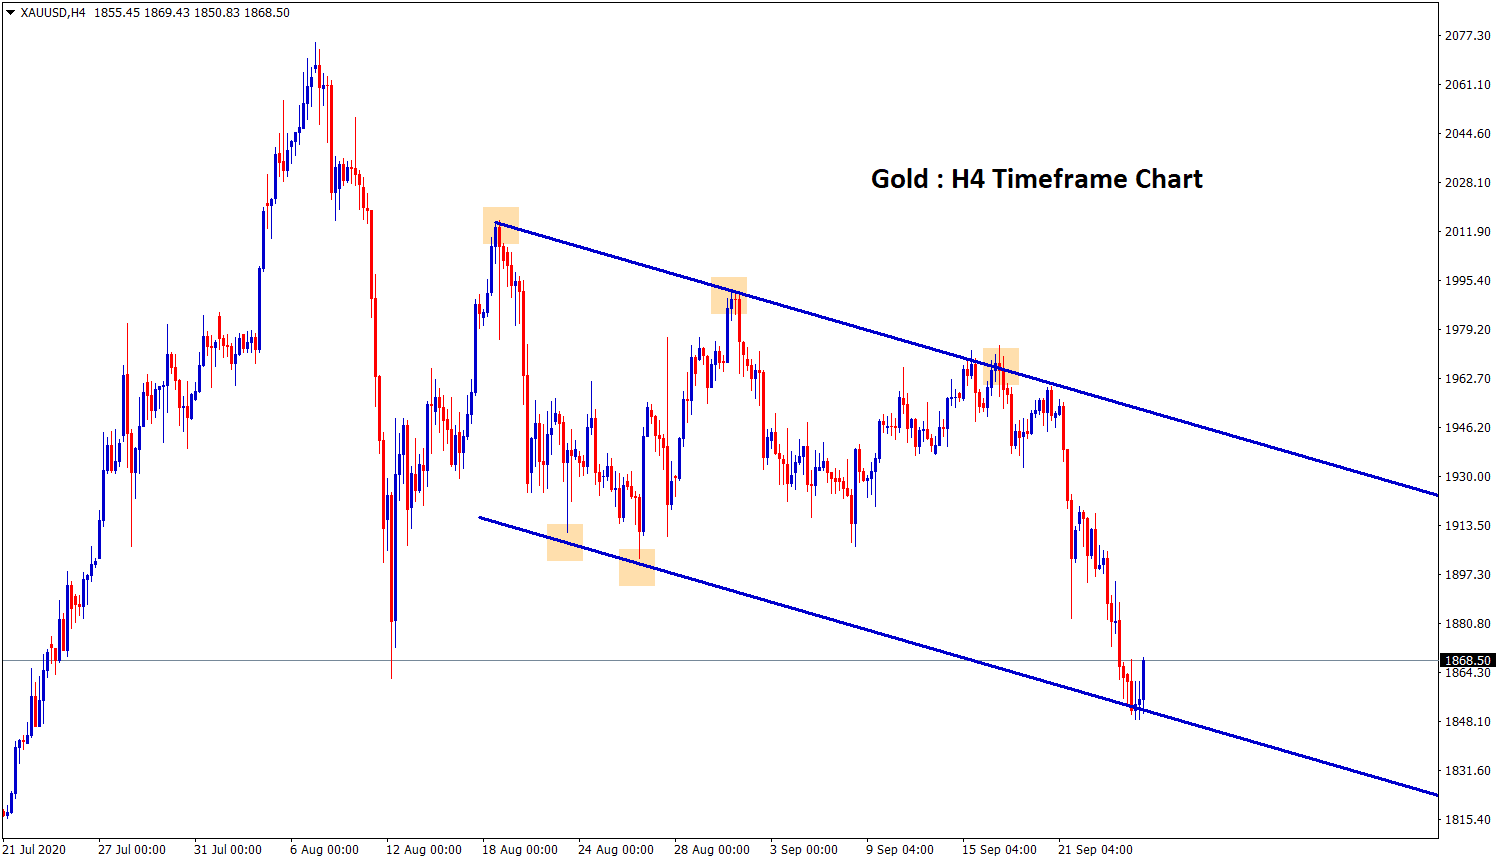 gold descending channel pattern in h4